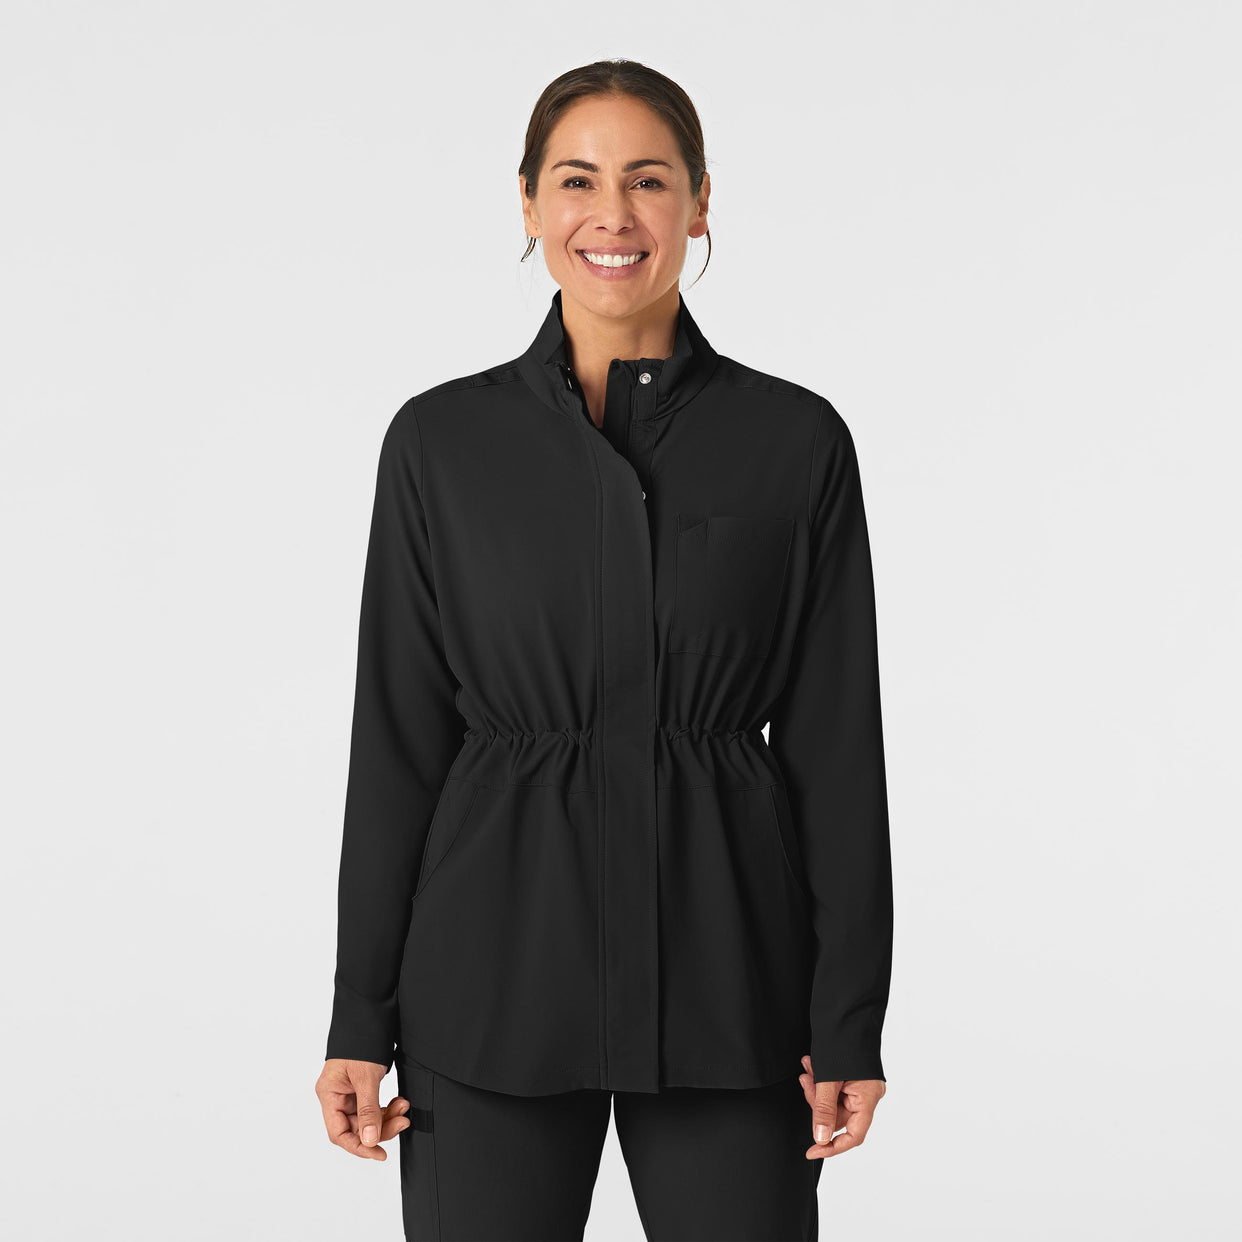 RENEW Women's Convertible Hood Fashion Jacket - Black